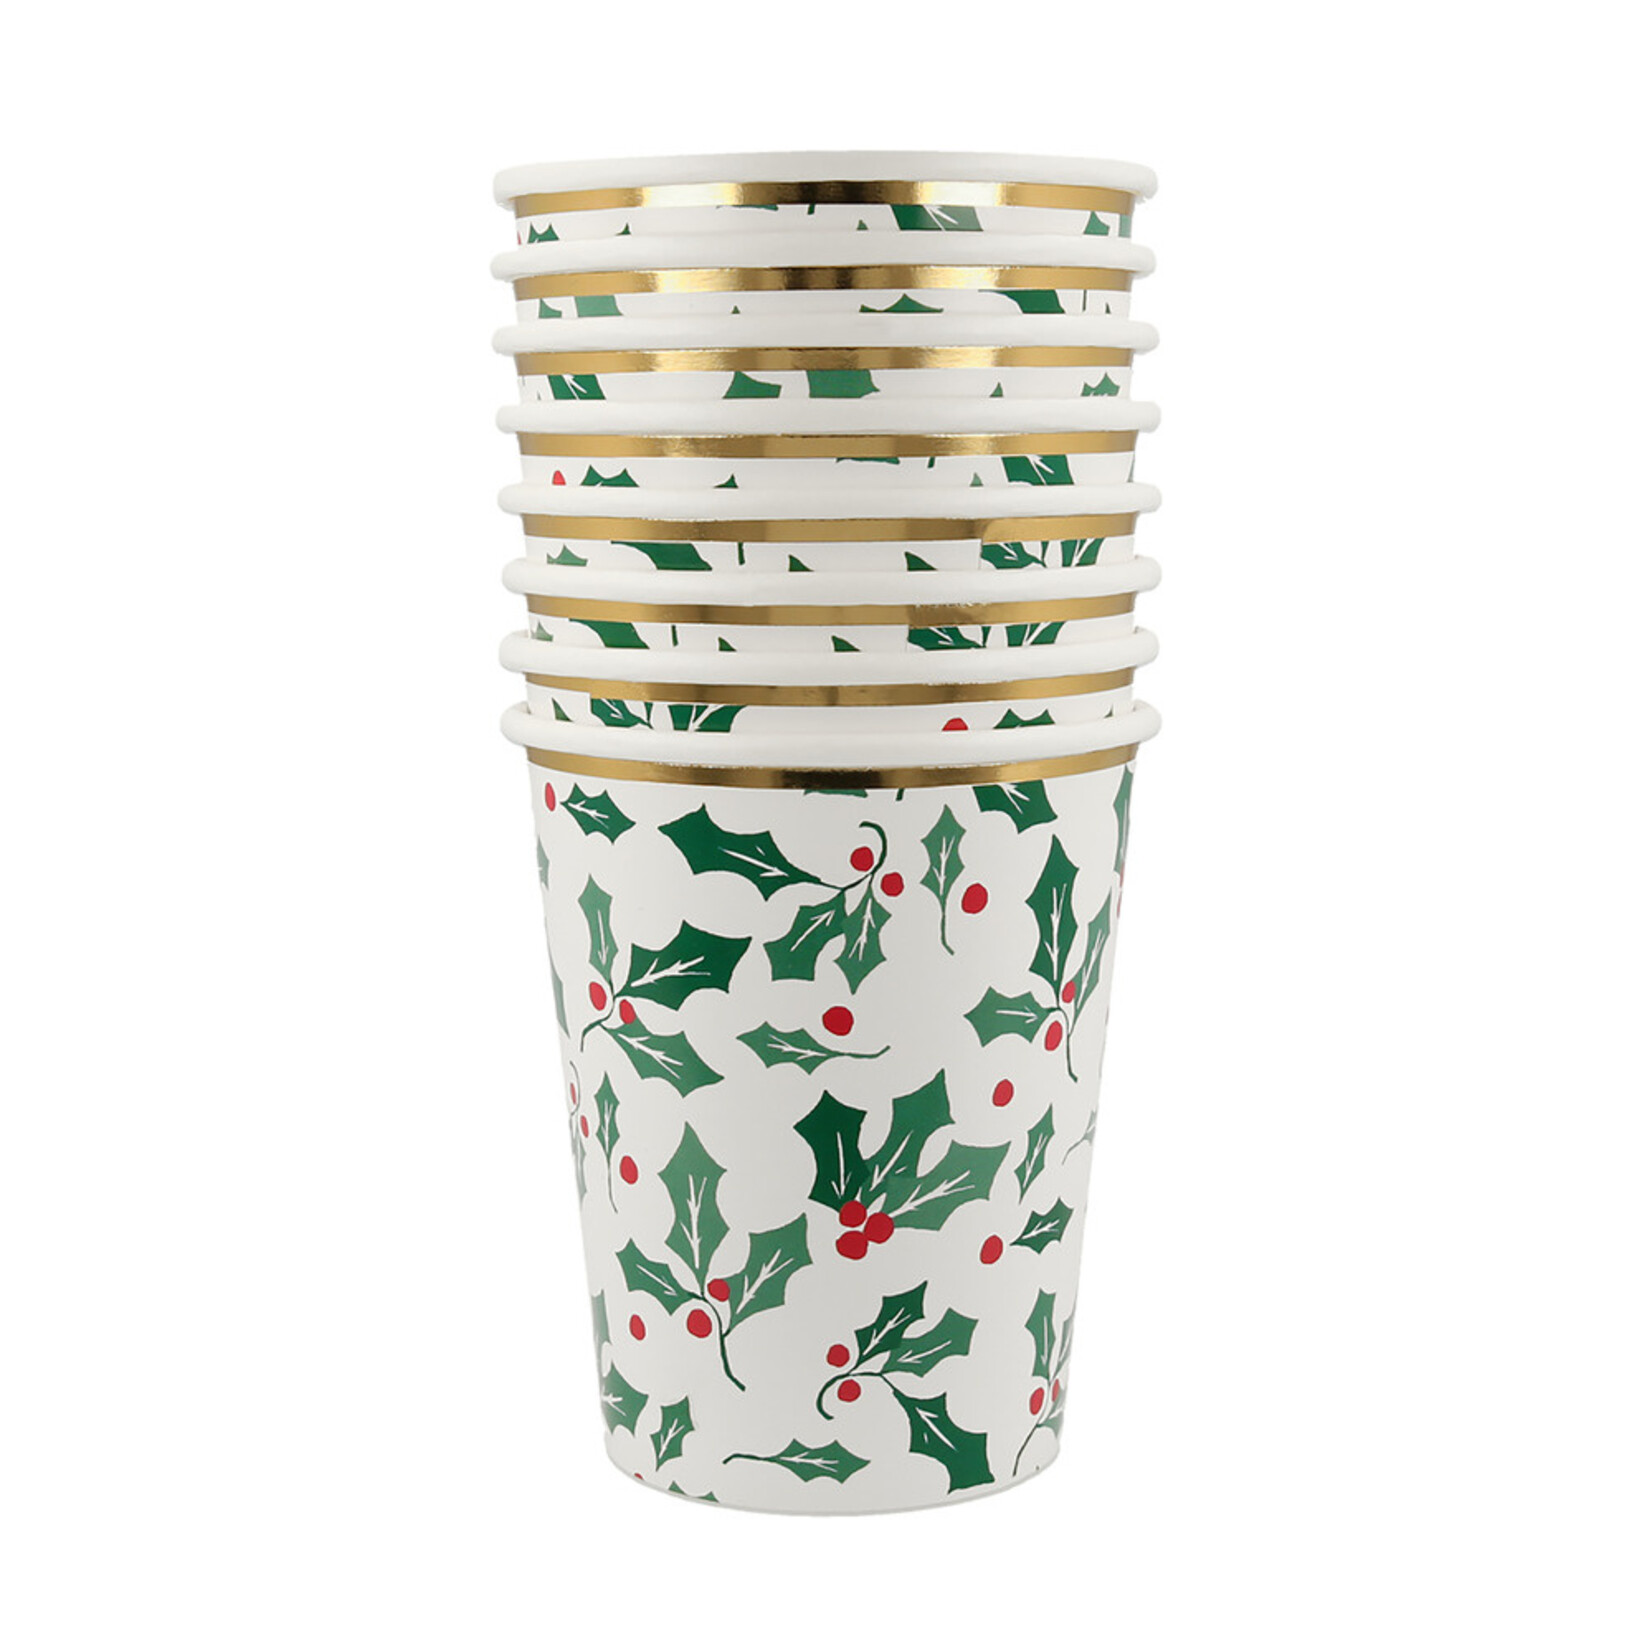 MERIMERI Holly pattern cups (8cs)